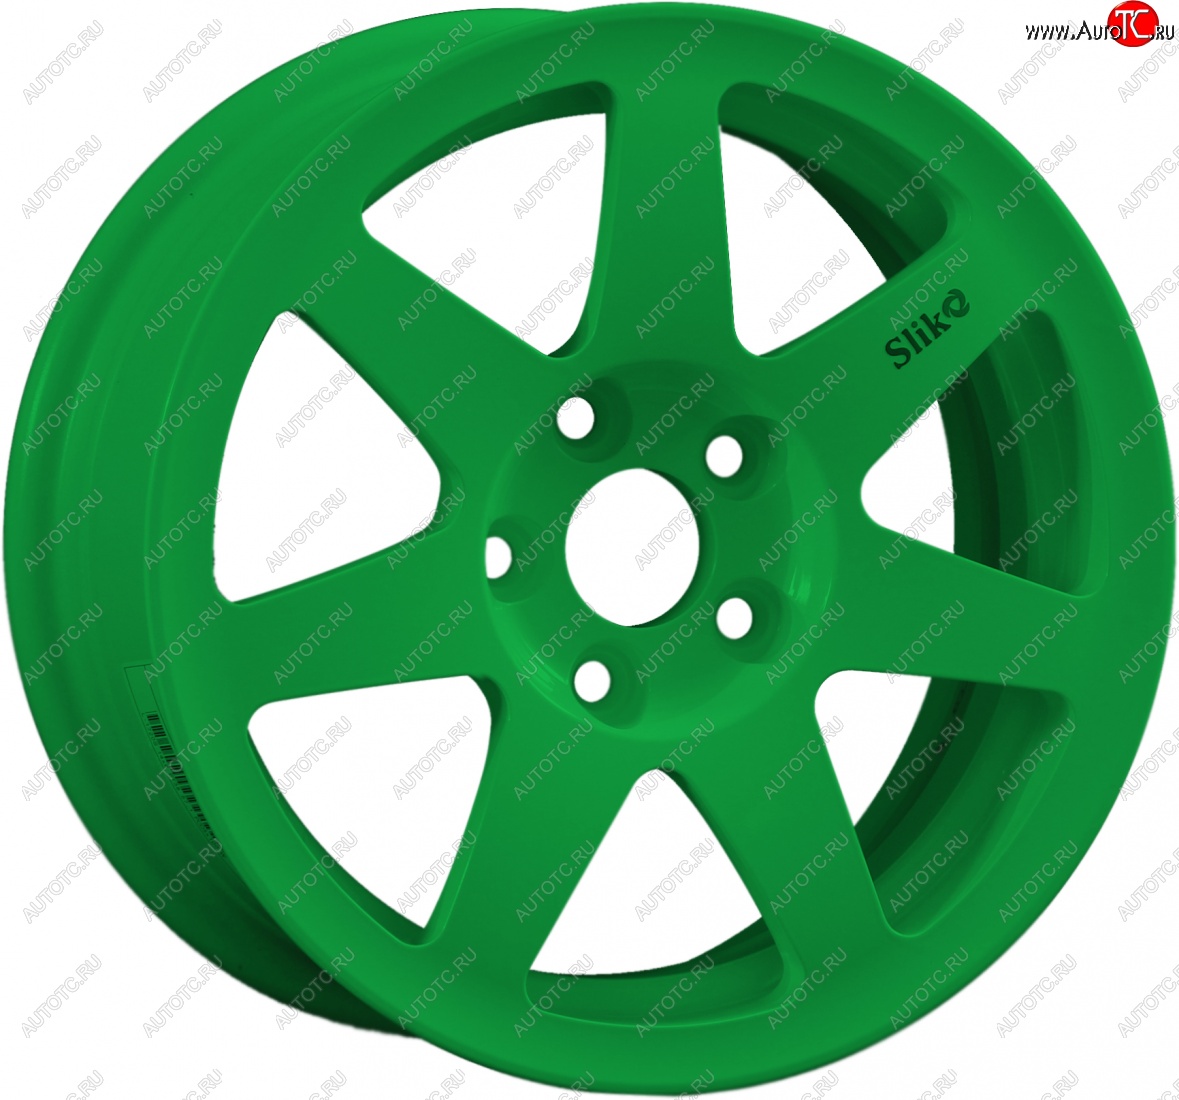 13 499 р. Кованый диск Slik Classik 6x14 (Зеленый) Уаз 315195 Хантер (2003-2024) 5x108.0xDIA108.0xET20.0 (Цвет: Зеленый)